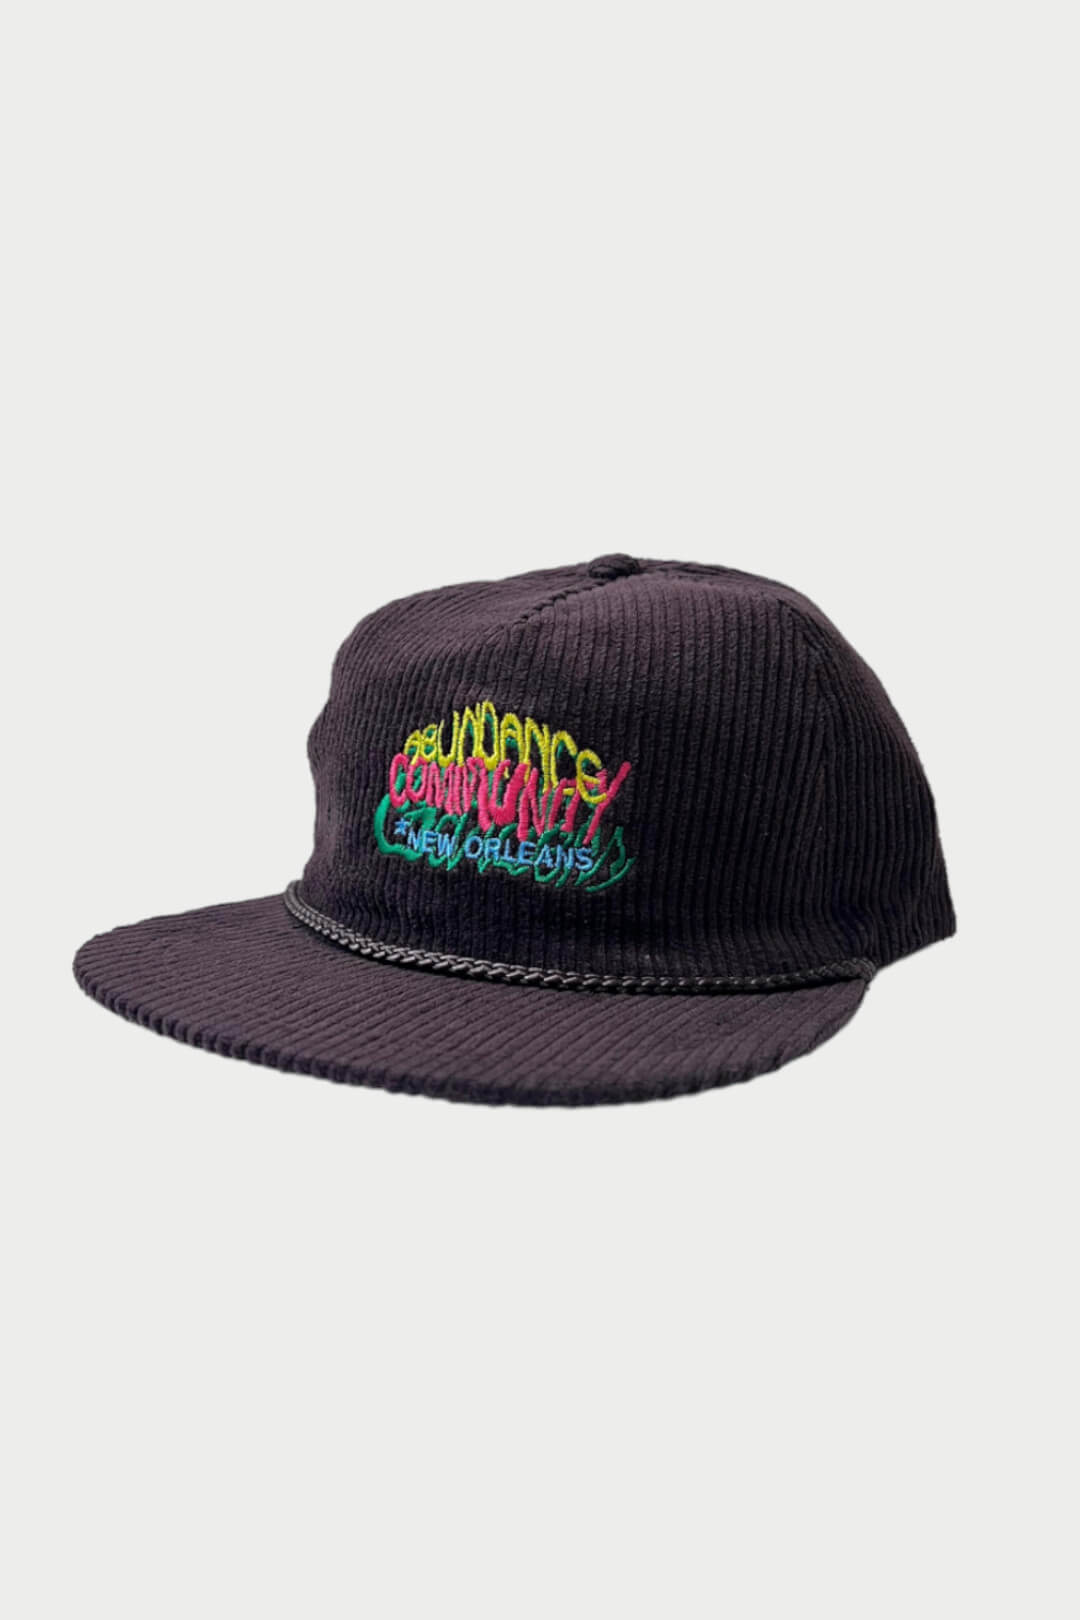 Community Gardens Cord Hat